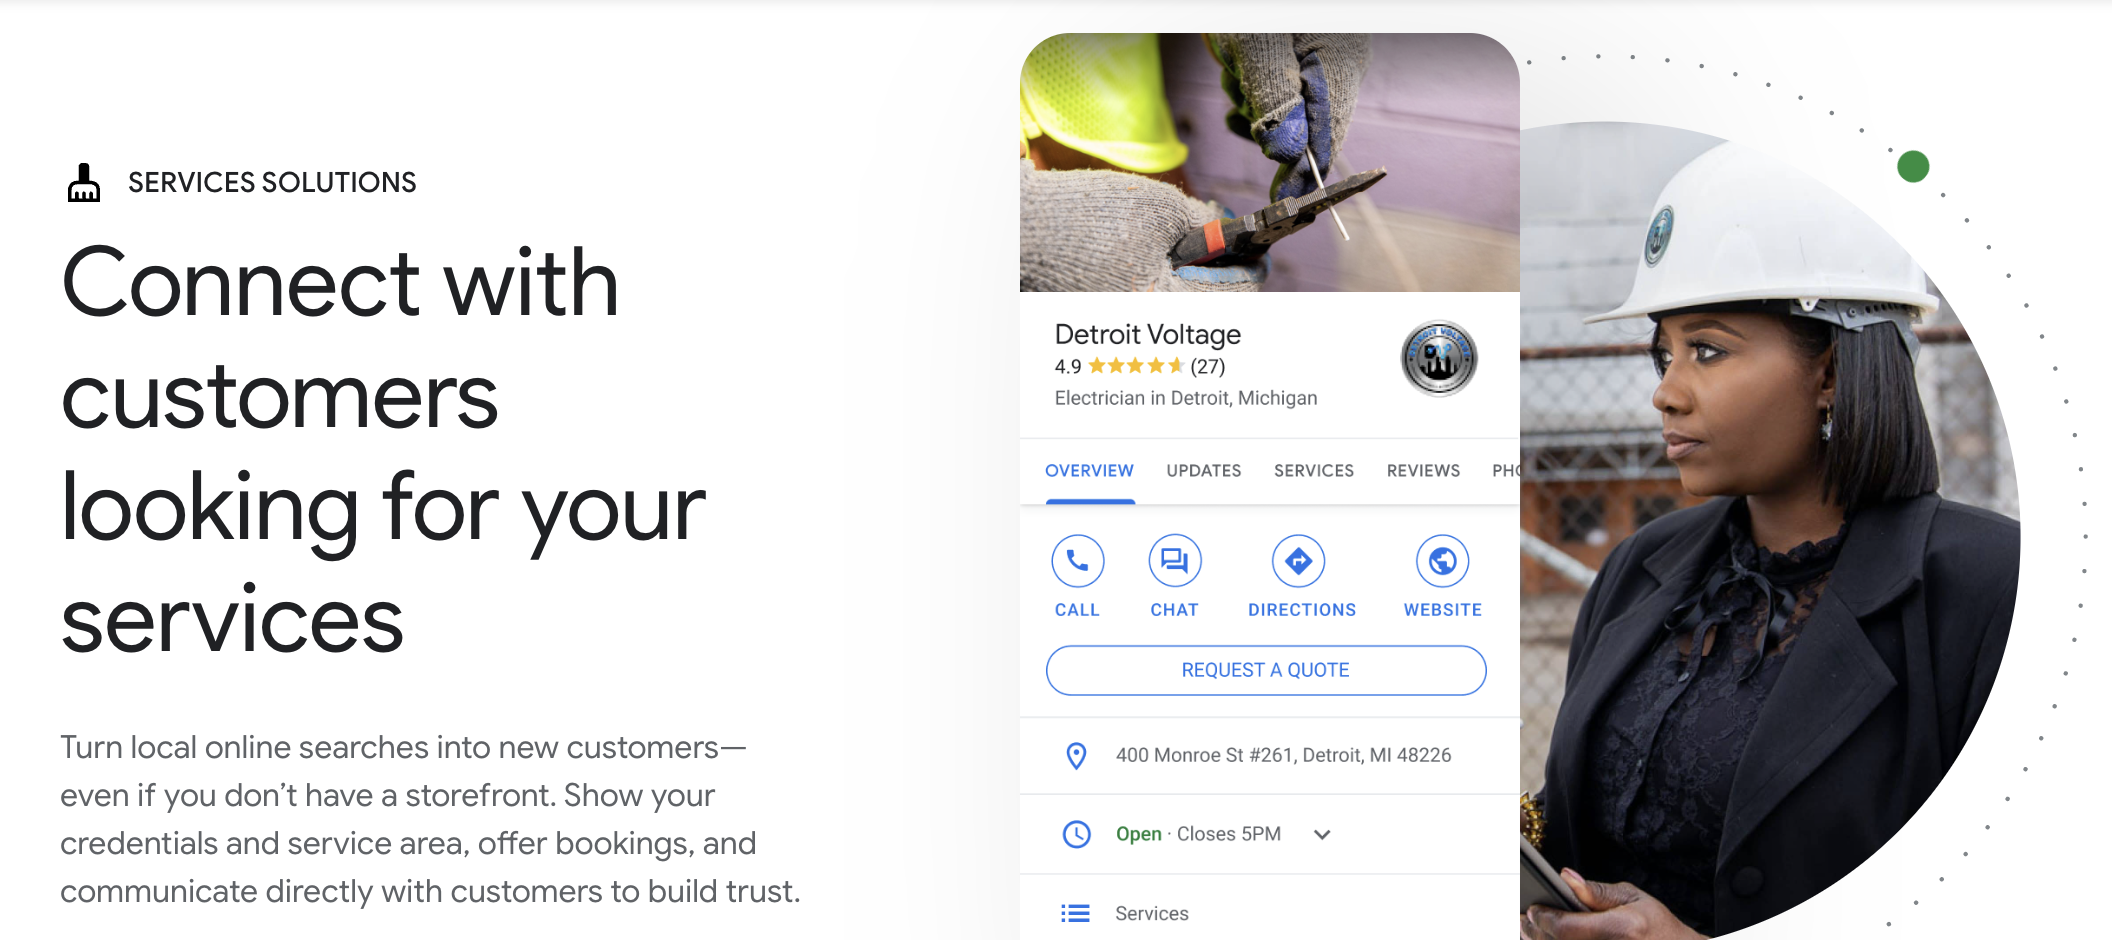 Google Services Solutions Screenshot